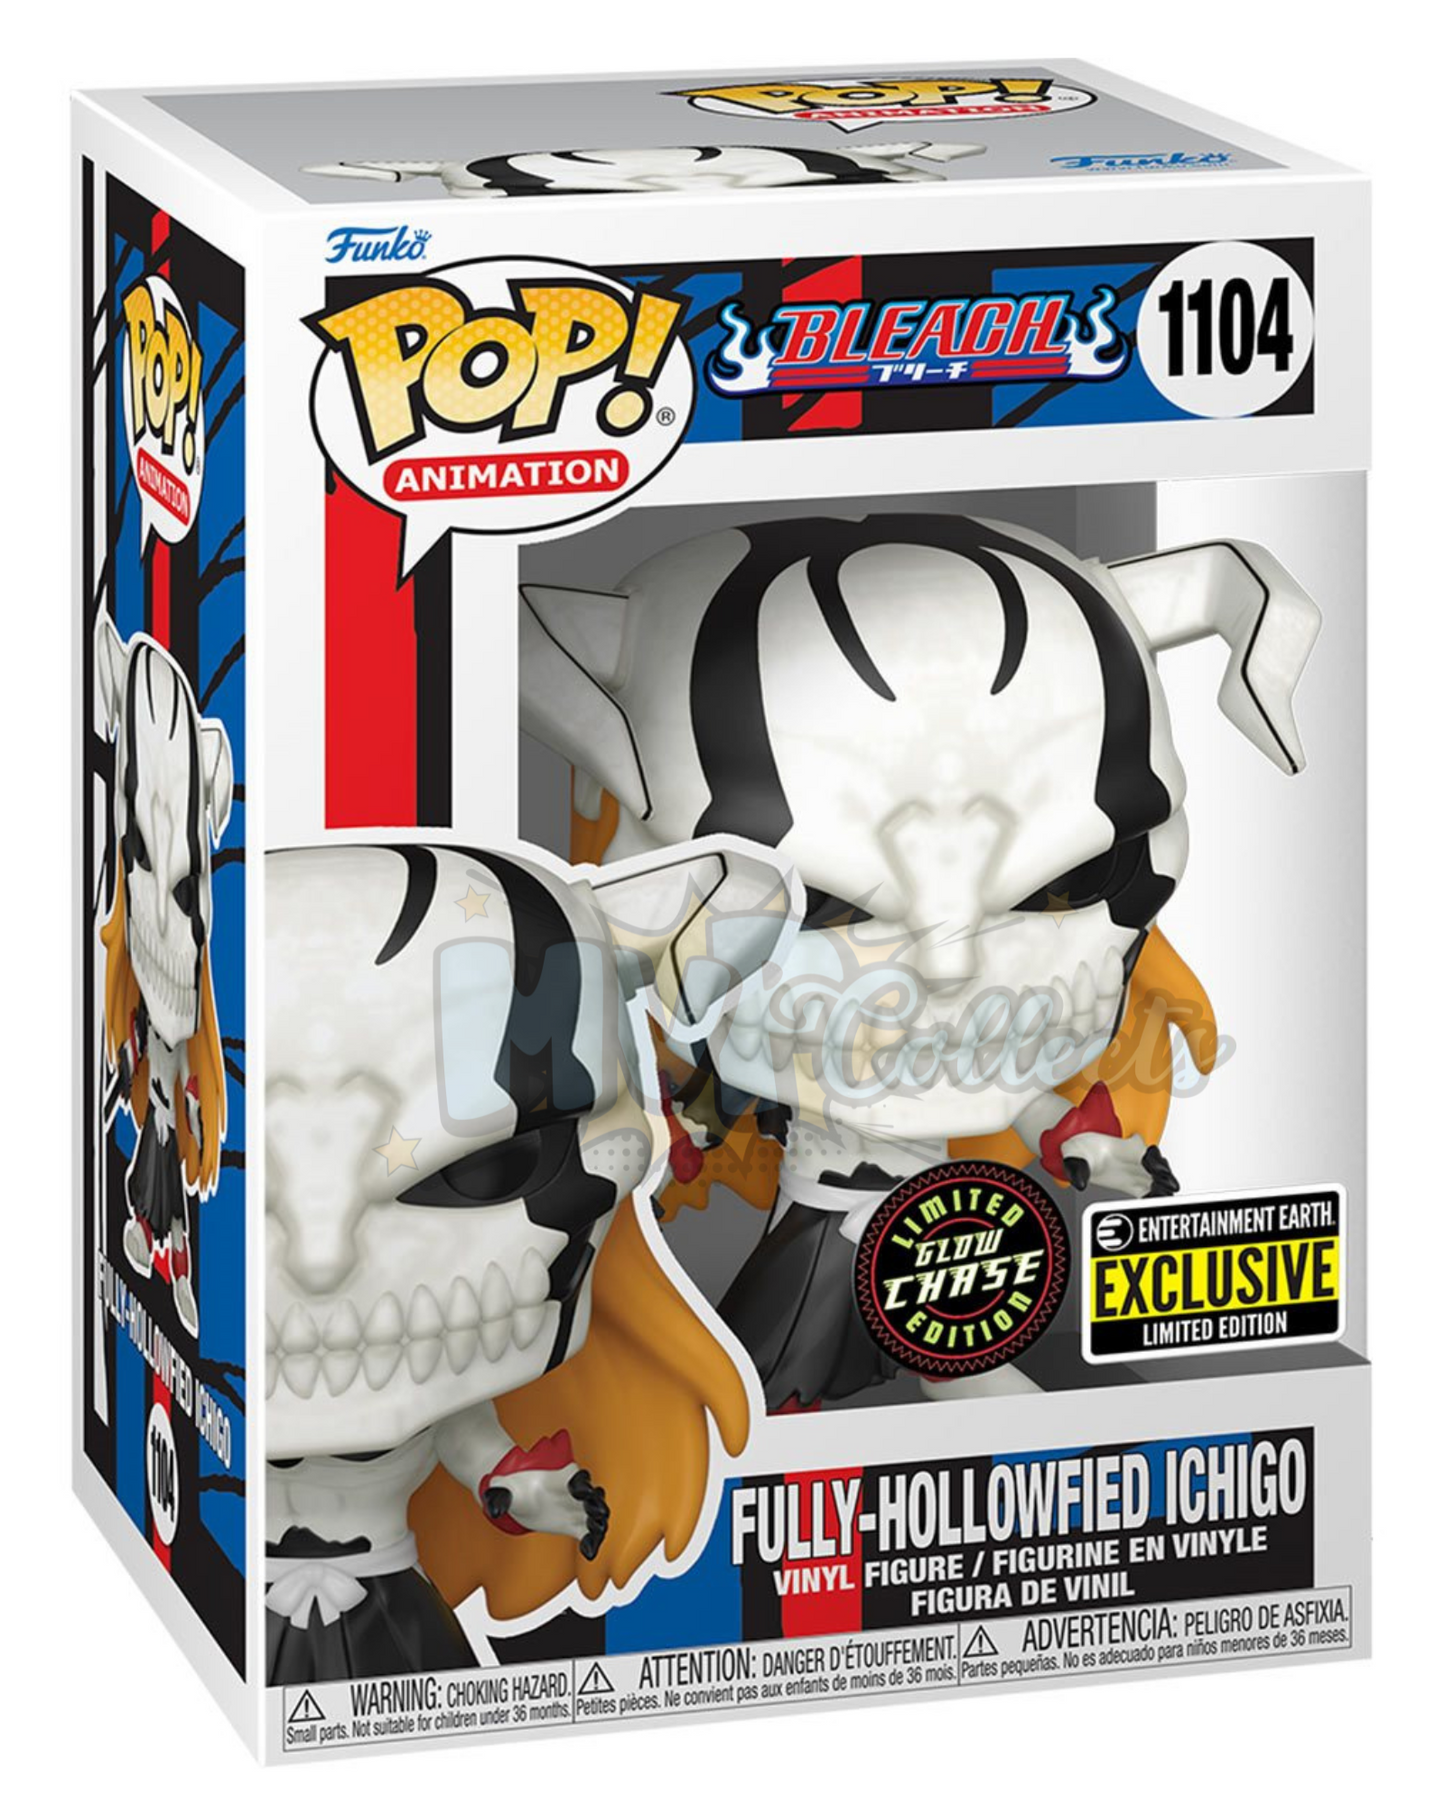 Fully-Hollowfied Ichigo EE Exclusive POP! 1104